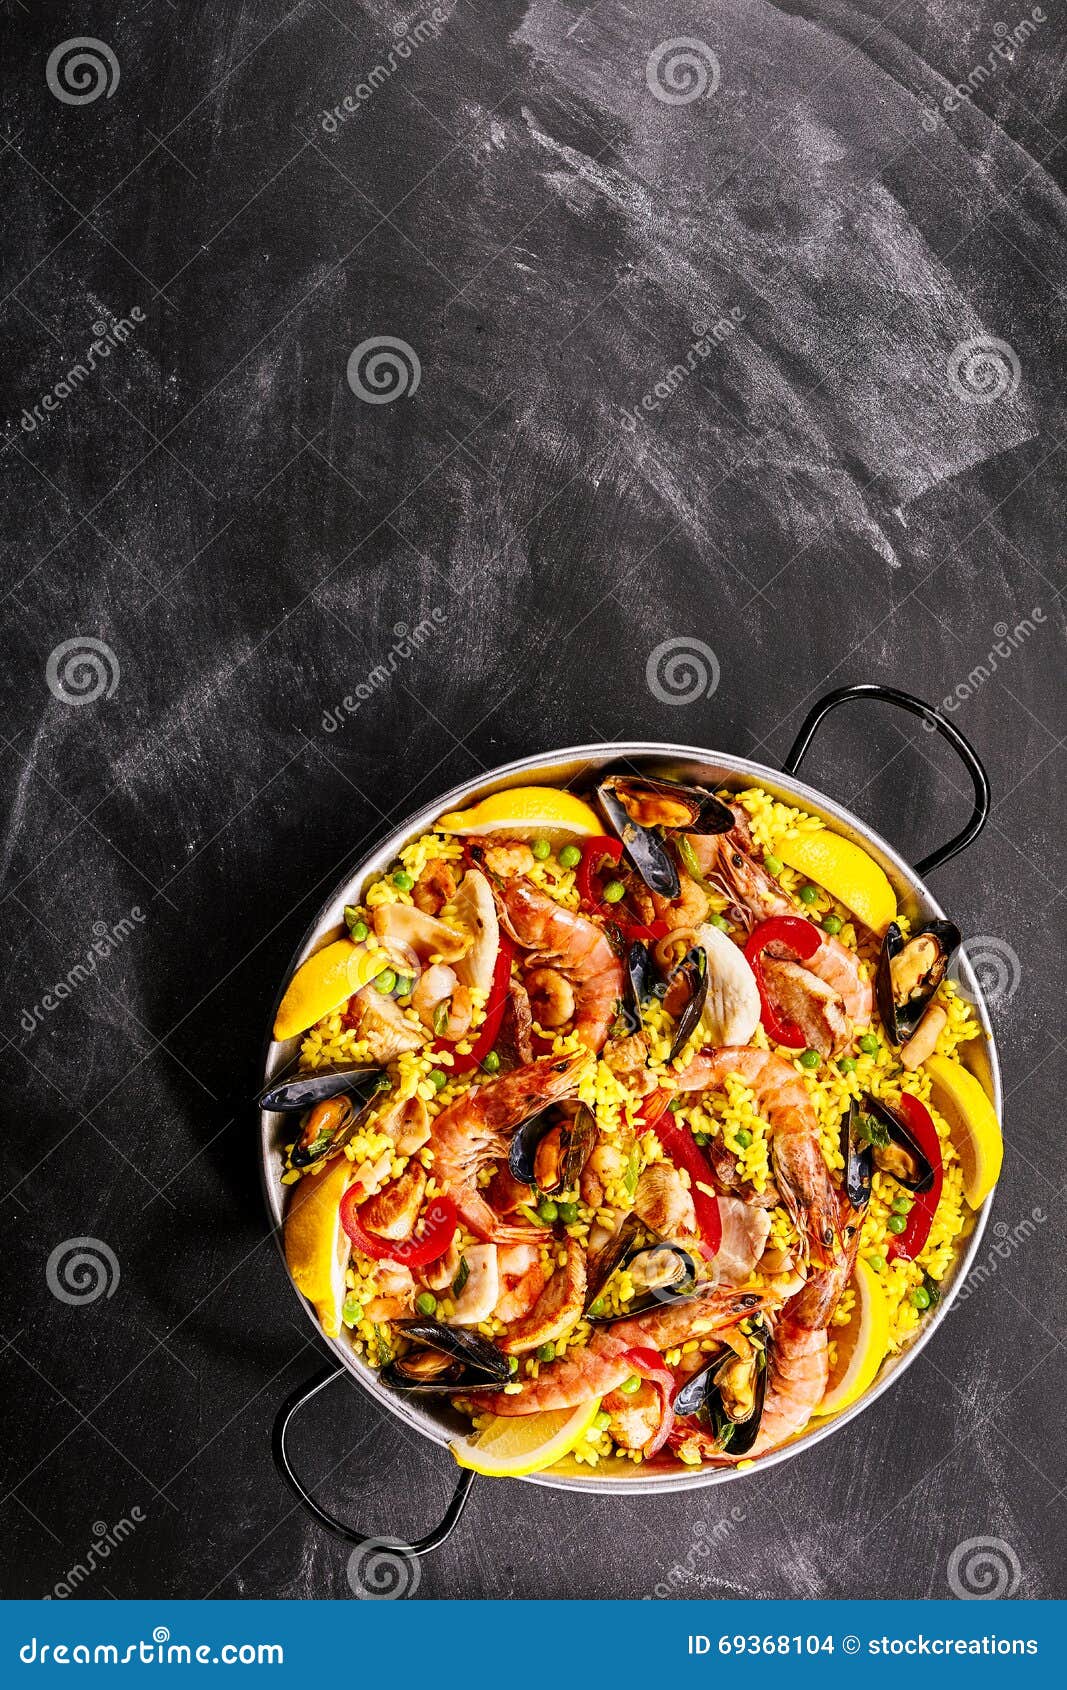  Colorful Seafood Paella Dish Shellfish Stock Images 339 